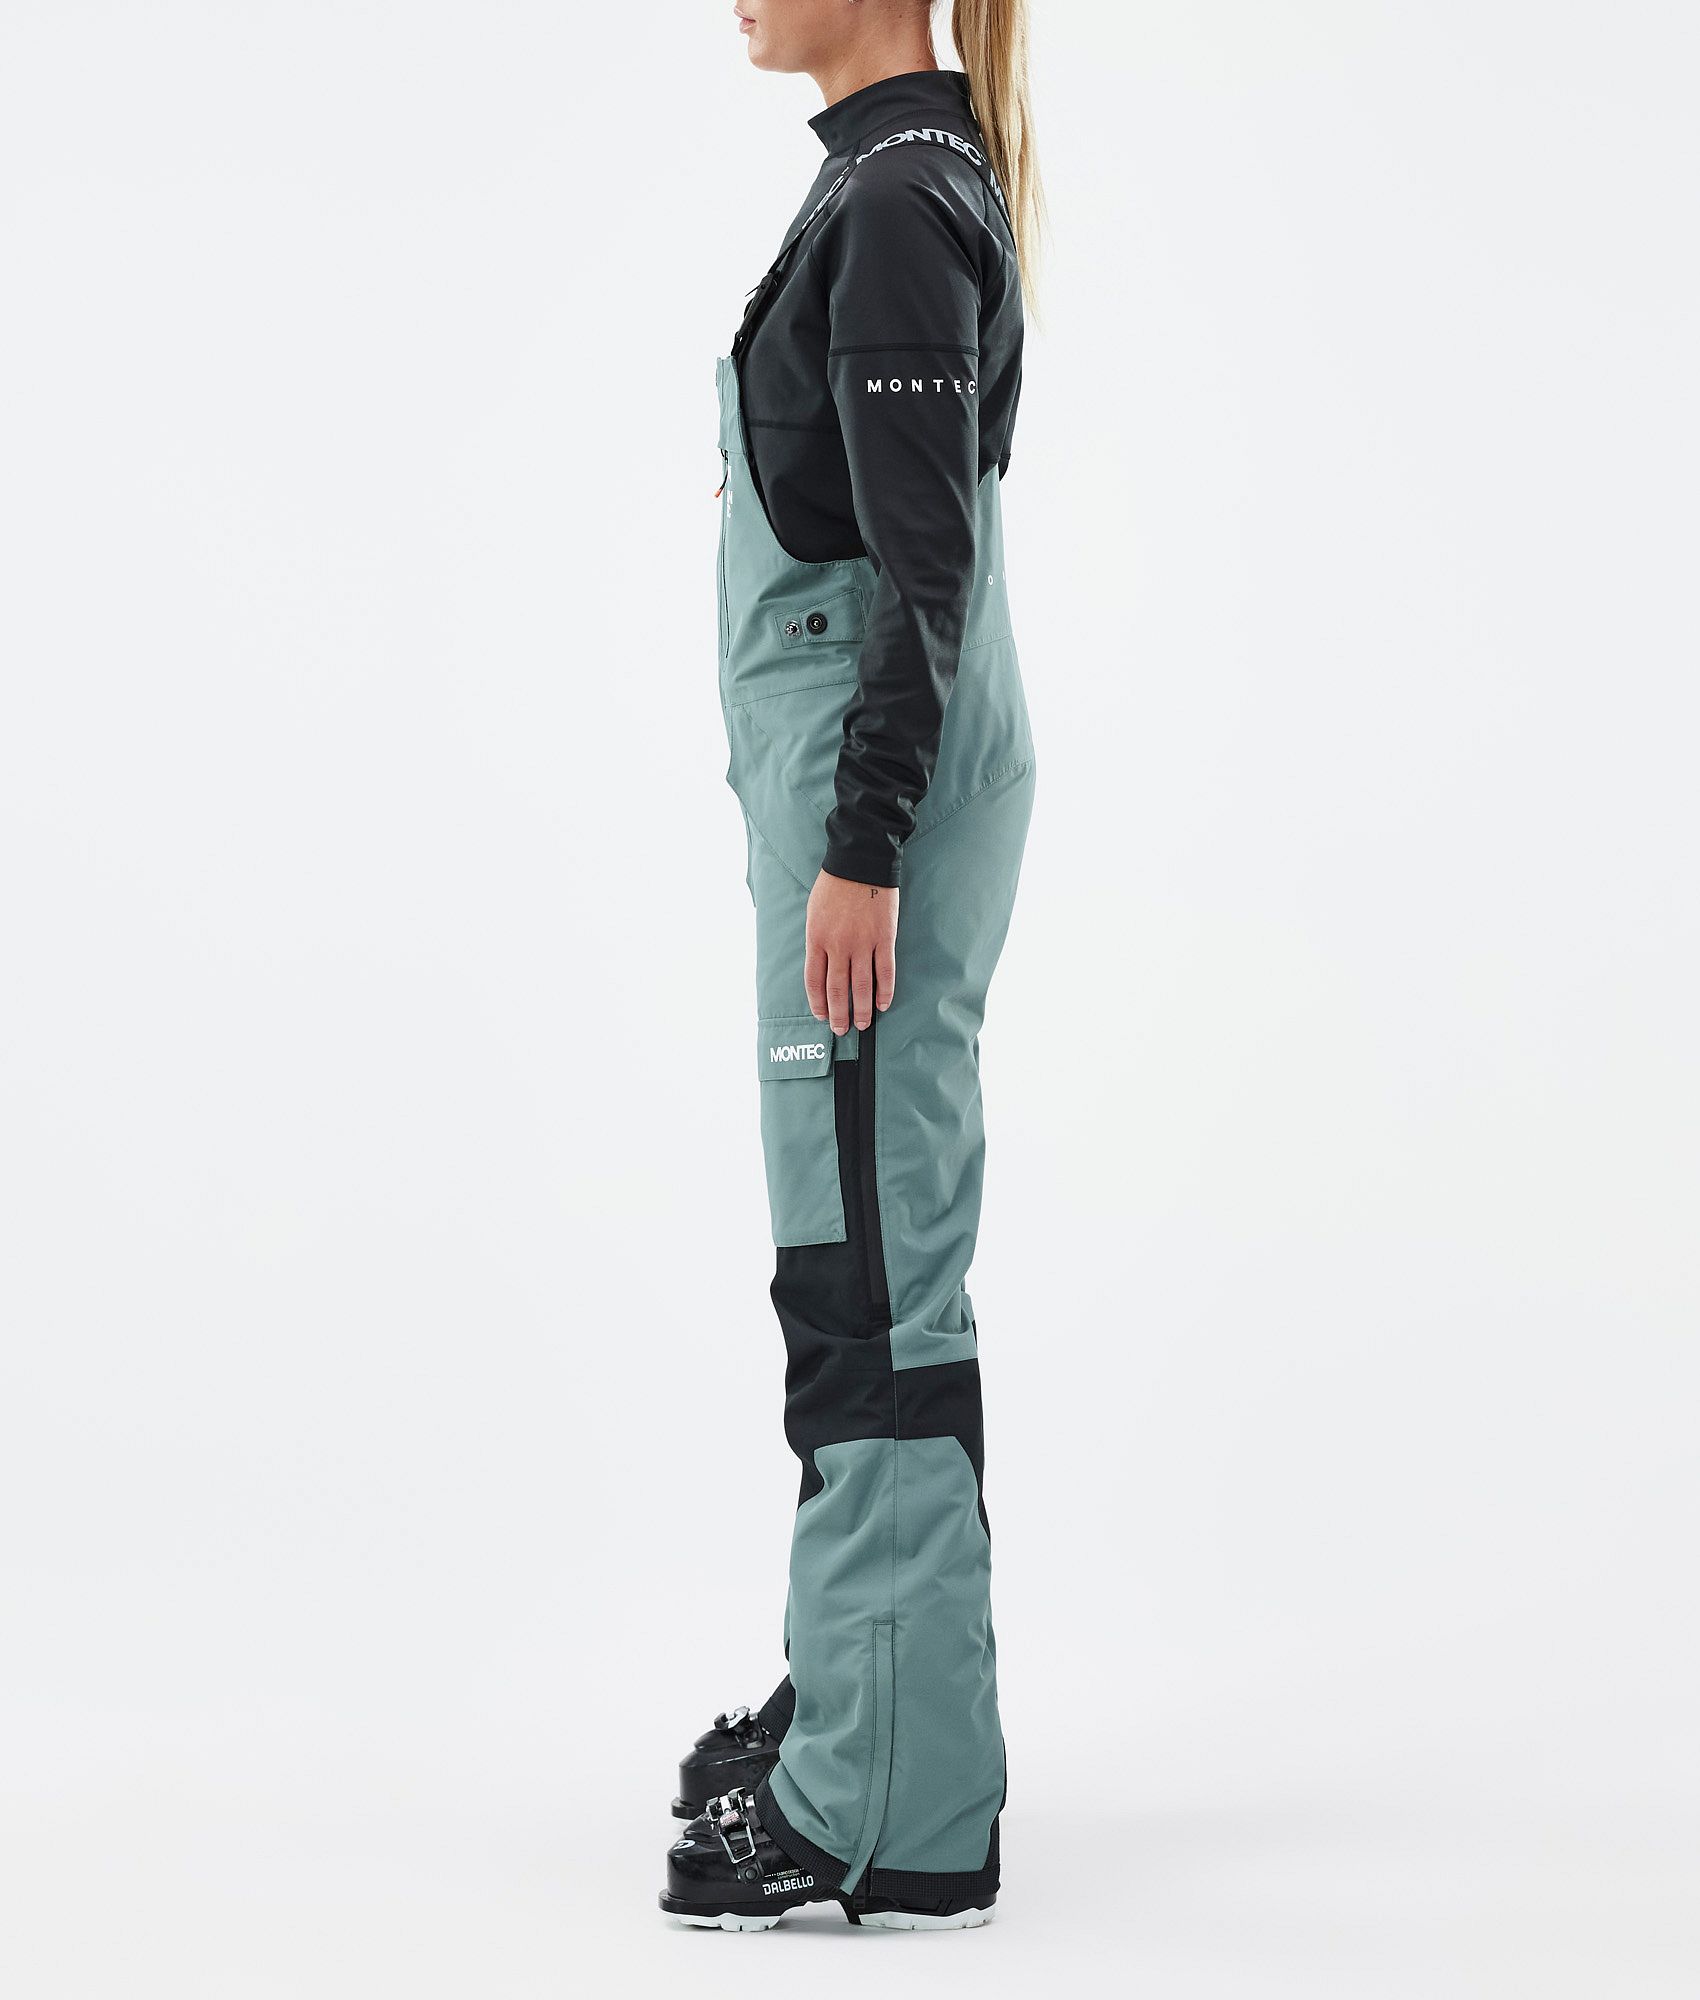 Norrøna Lofoten GORE-TEX Pants - Ski Trousers Women's | Free UK Delivery |  Alpinetrek.co.uk